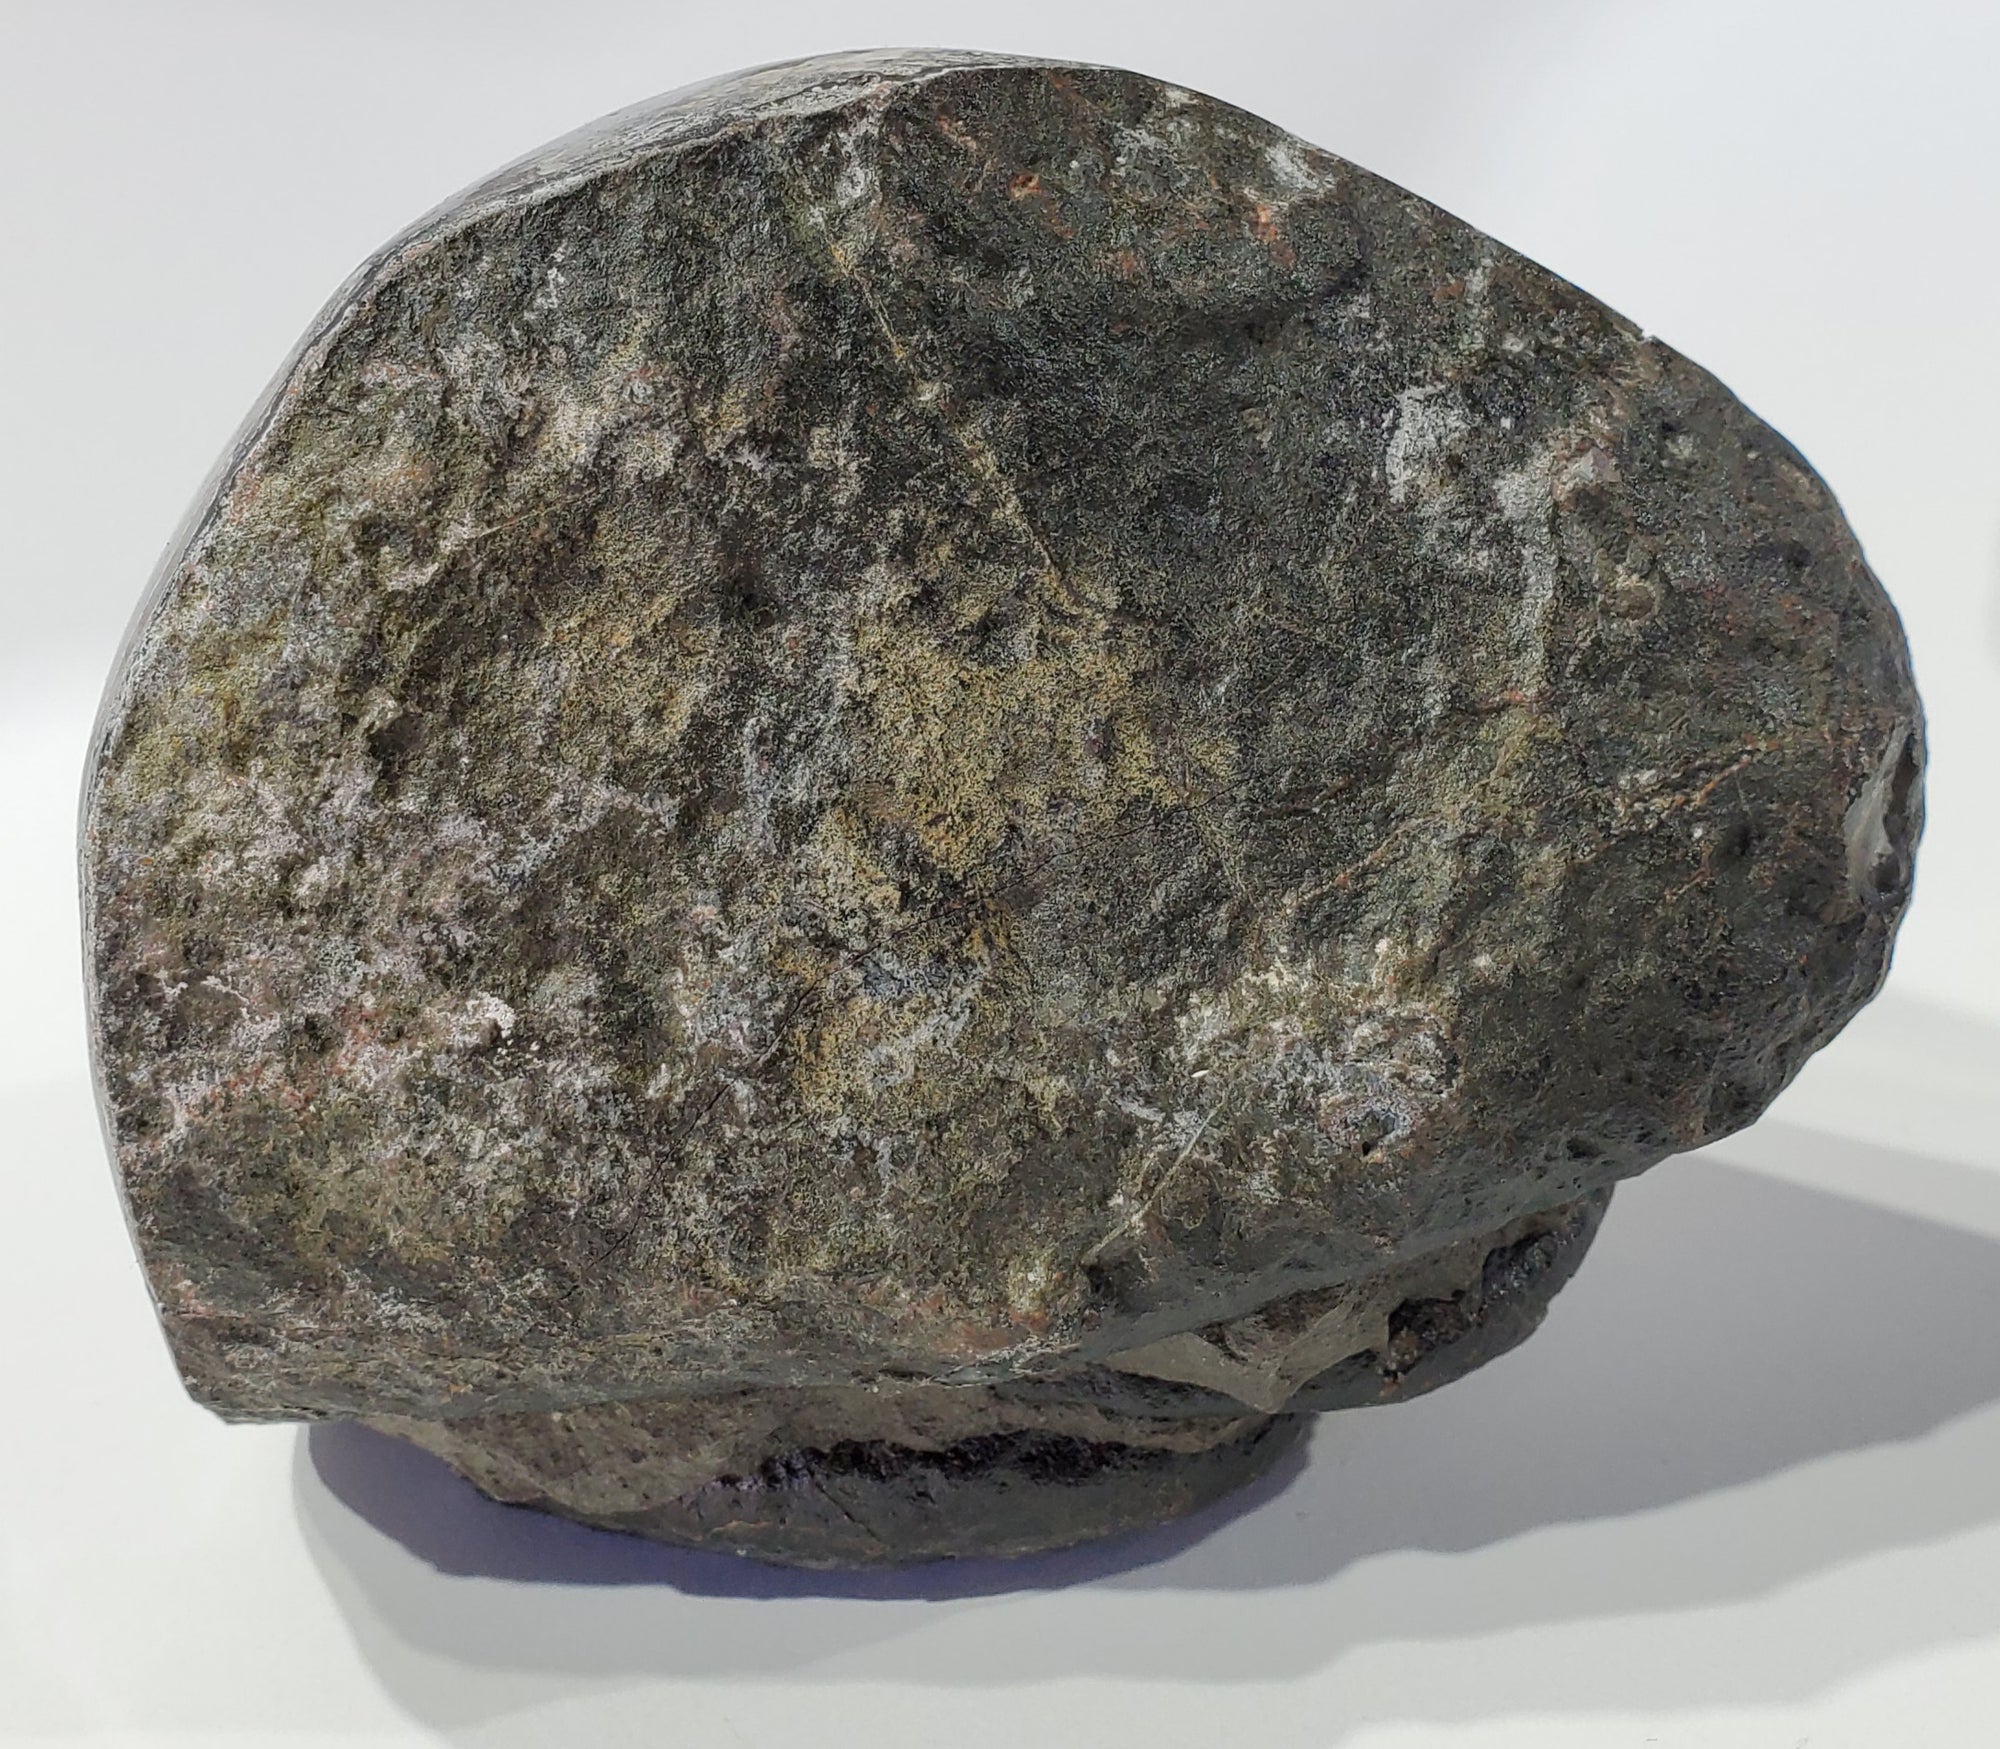 Amethyst w/ Calcite, Uruguay